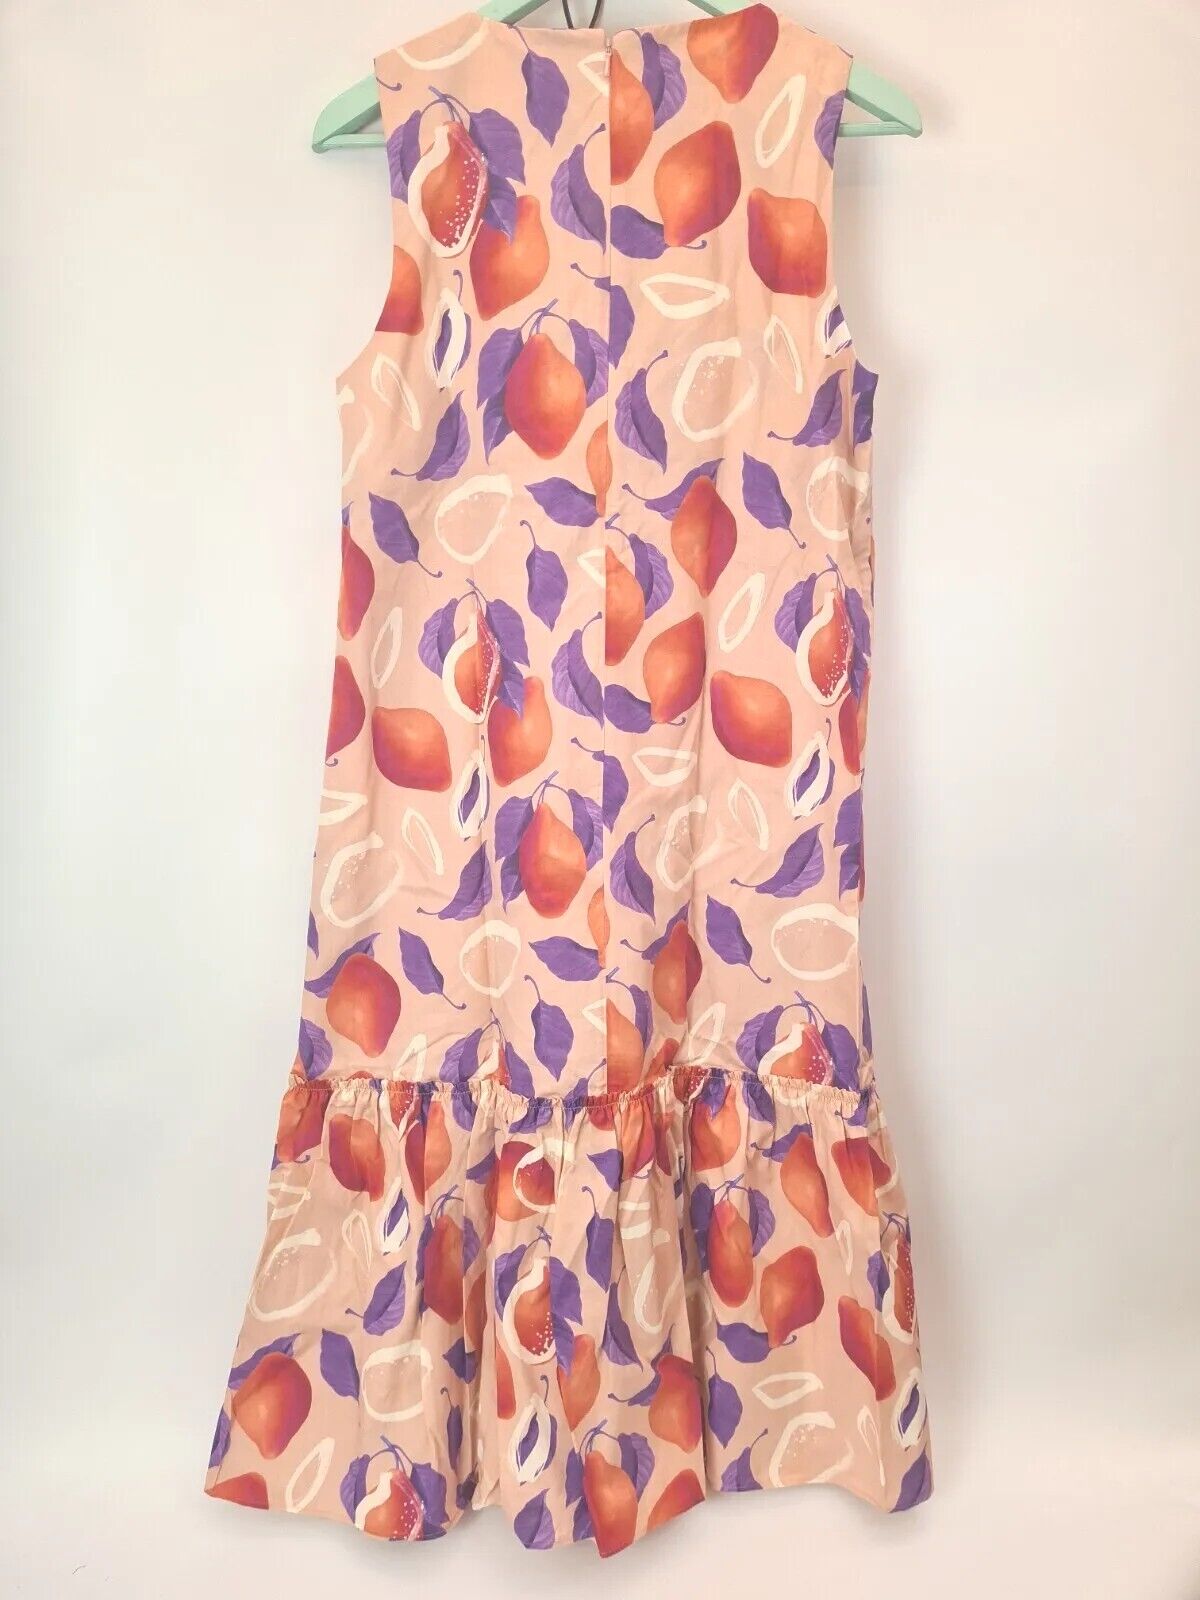 Paul Smith Fruit Print Frill Hem Dress. UK Size Large (42) **** V27